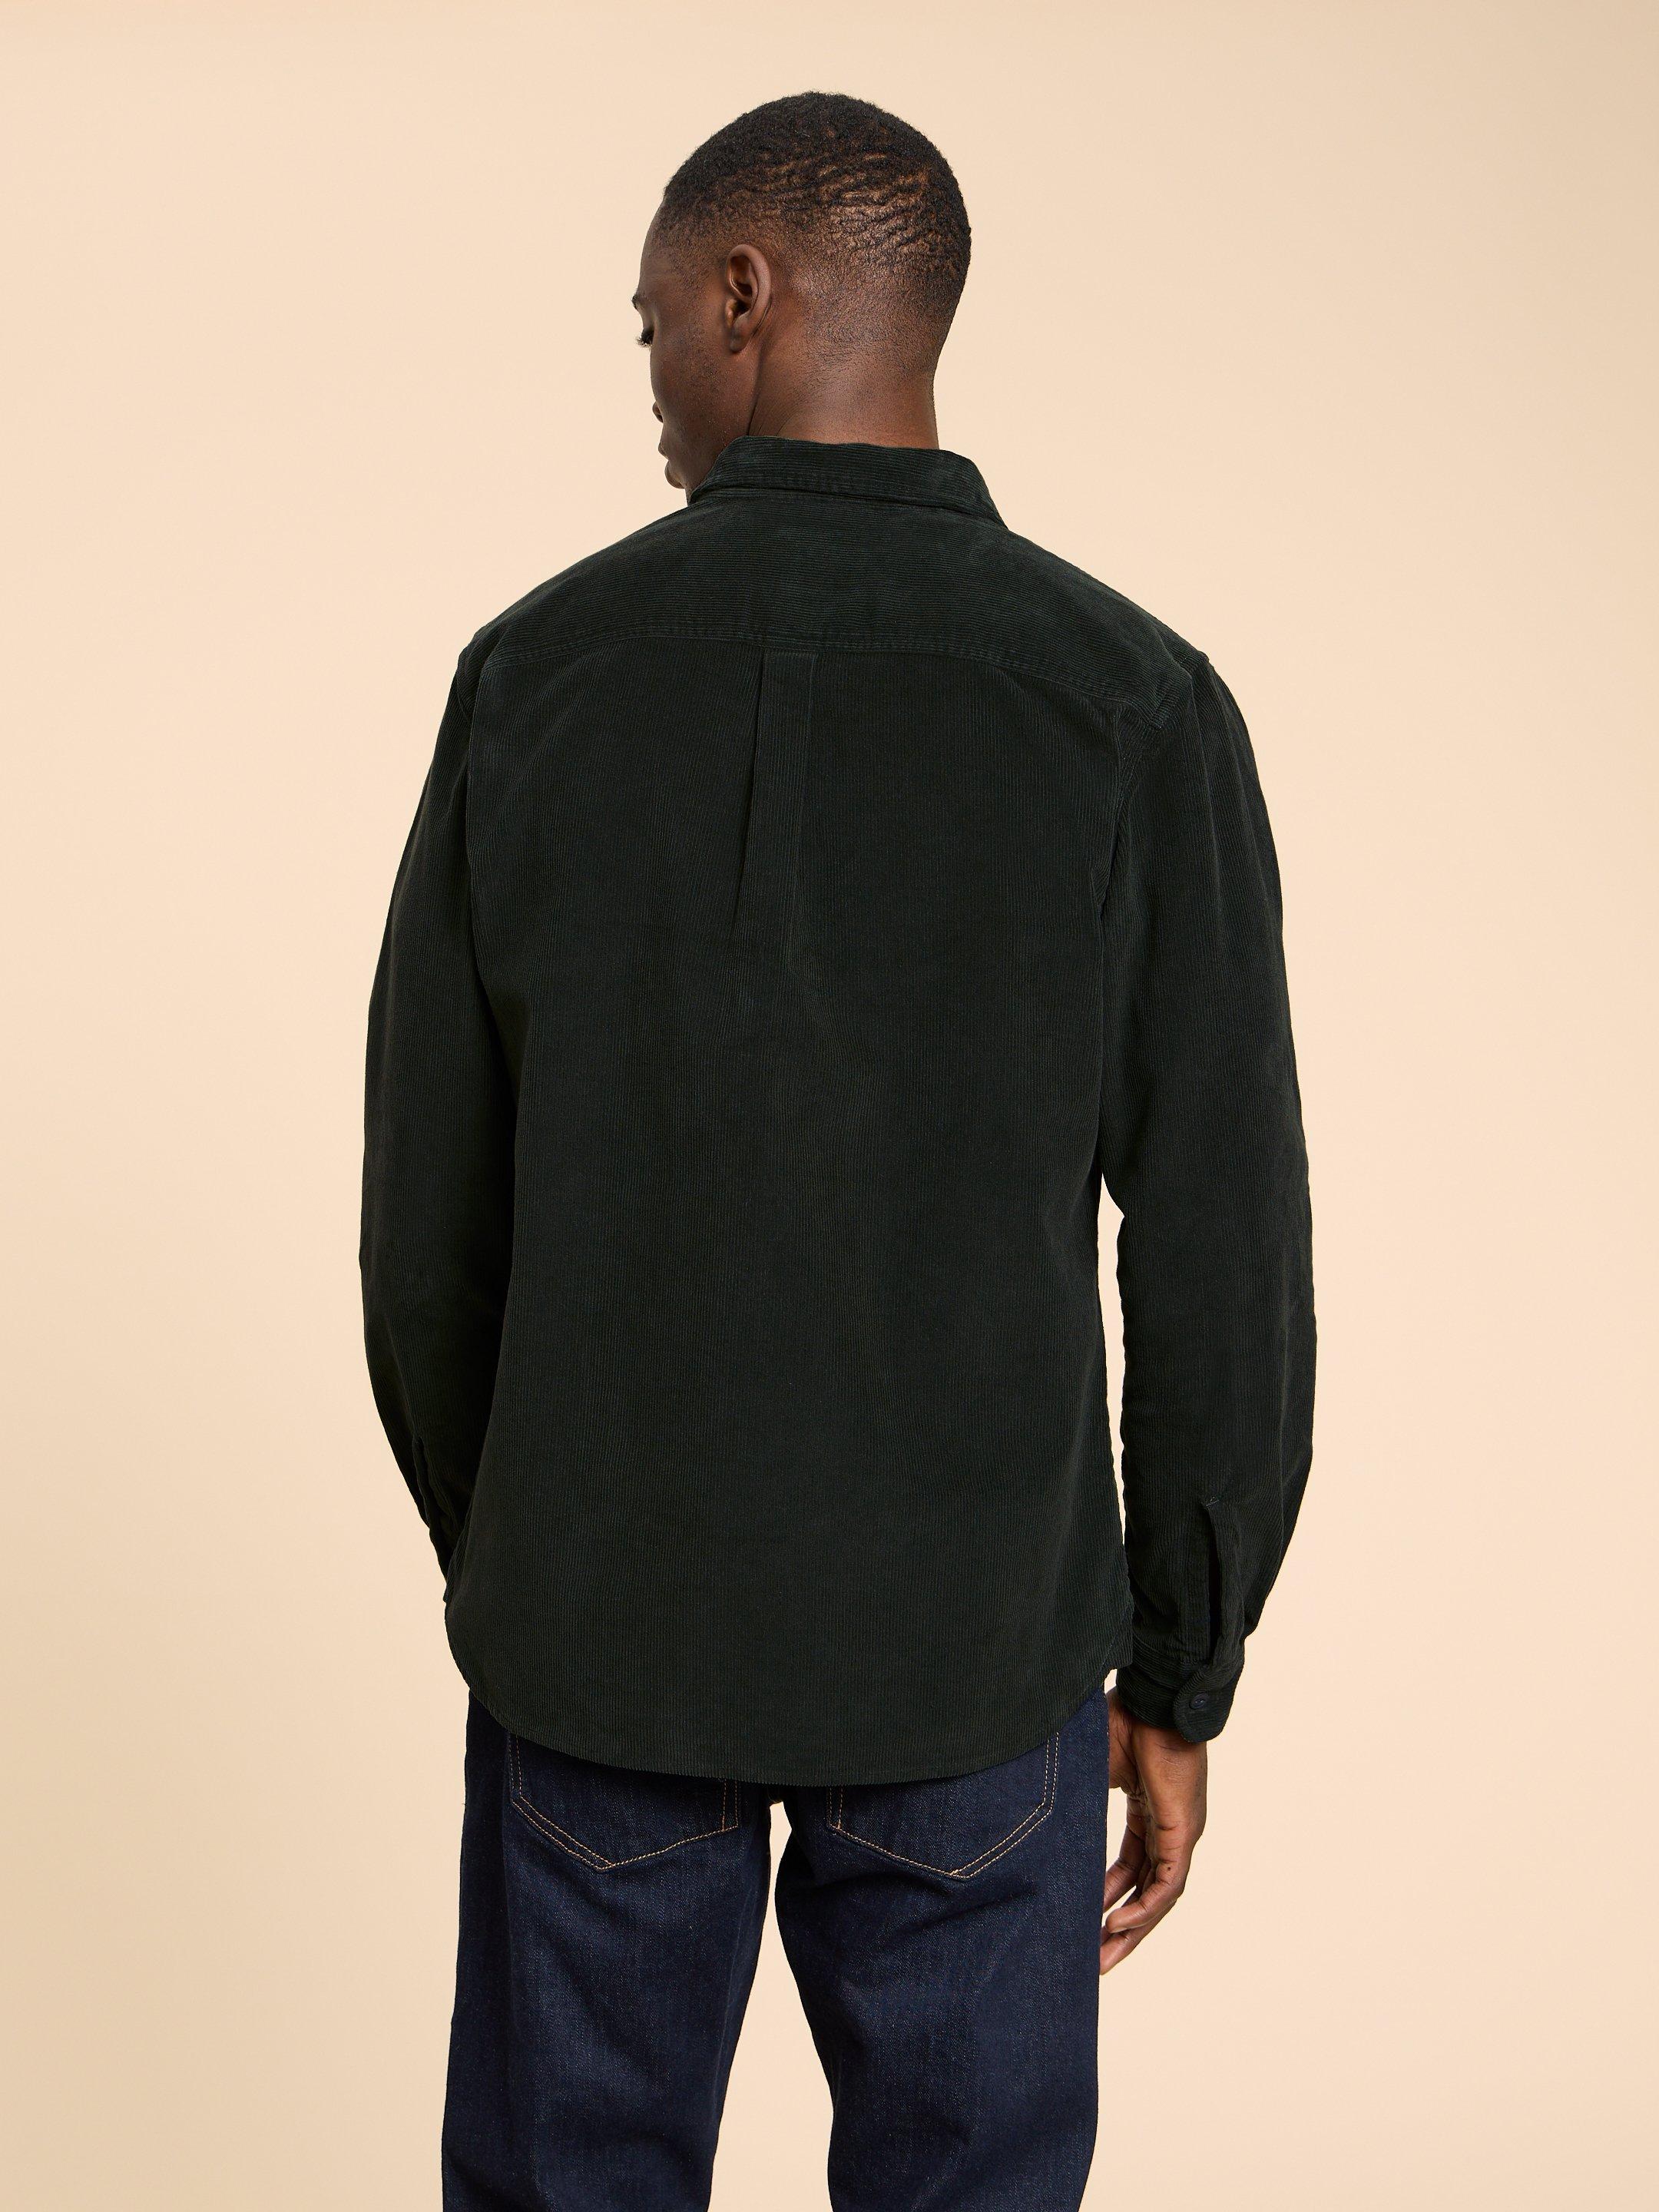 Whitwick Cord Shirt in DK GREEN - MODEL BACK